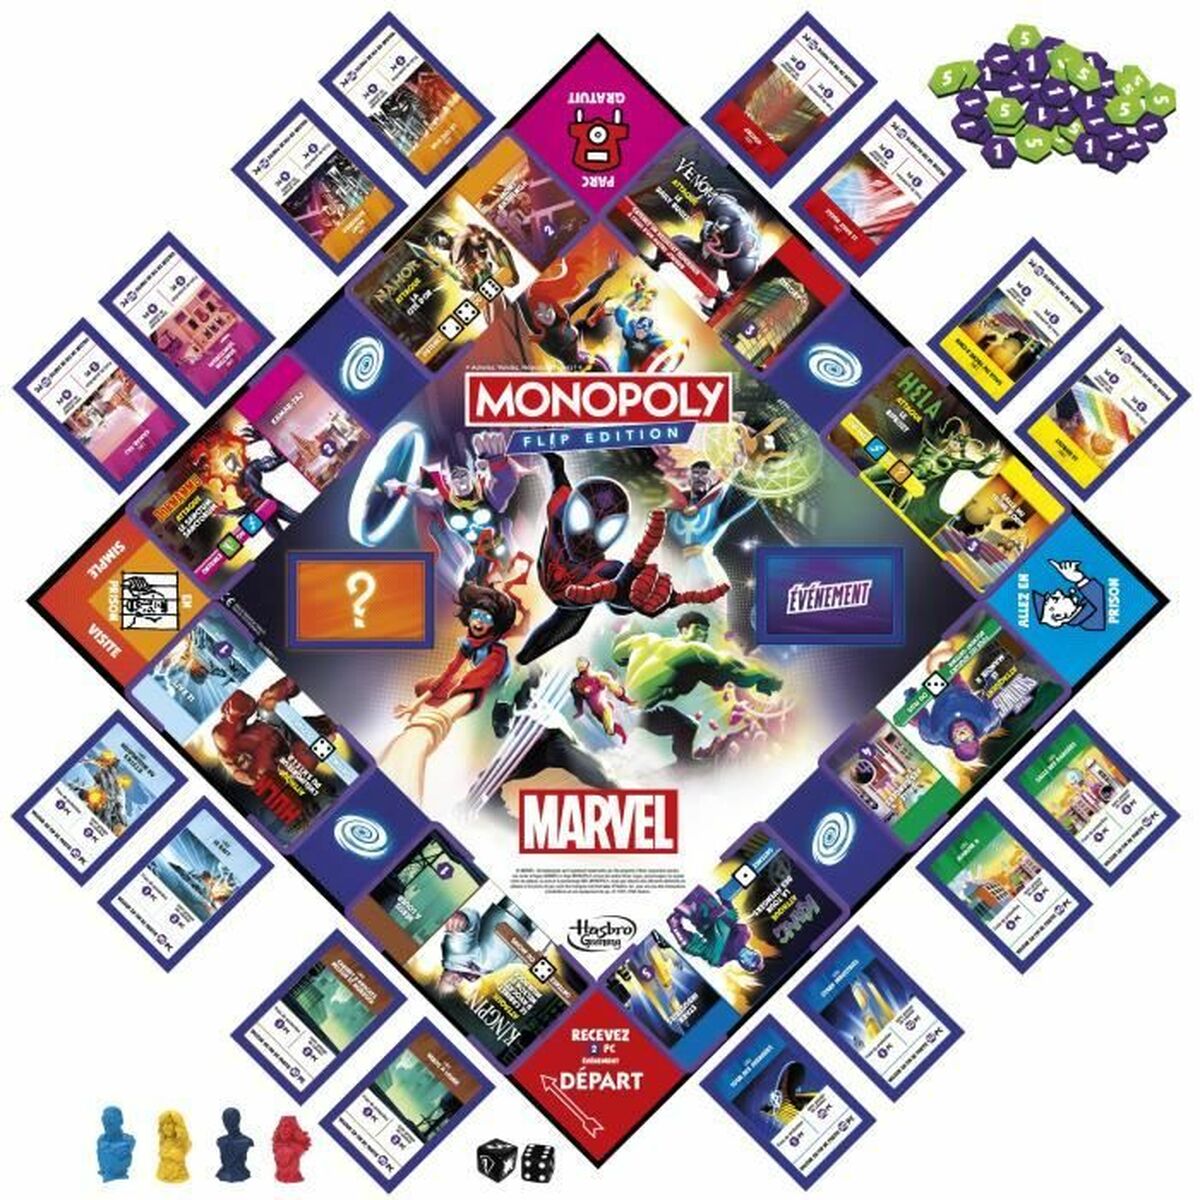 Jeu de société Hasbro Monopoly Flip Edition  MARVEL